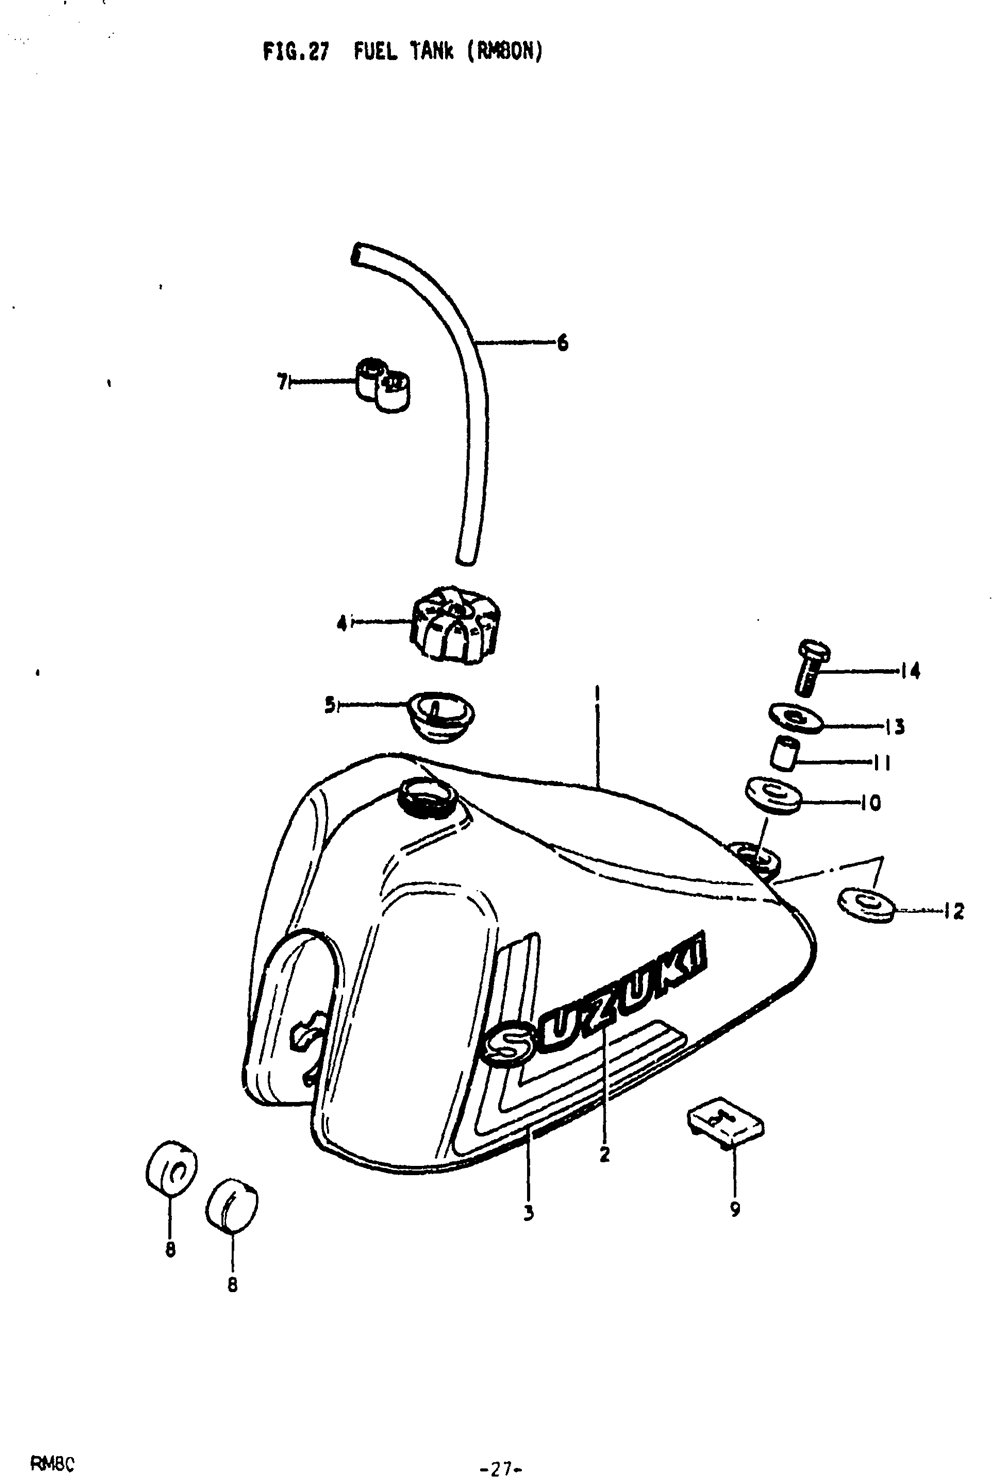 Fuel tank (rm80n)